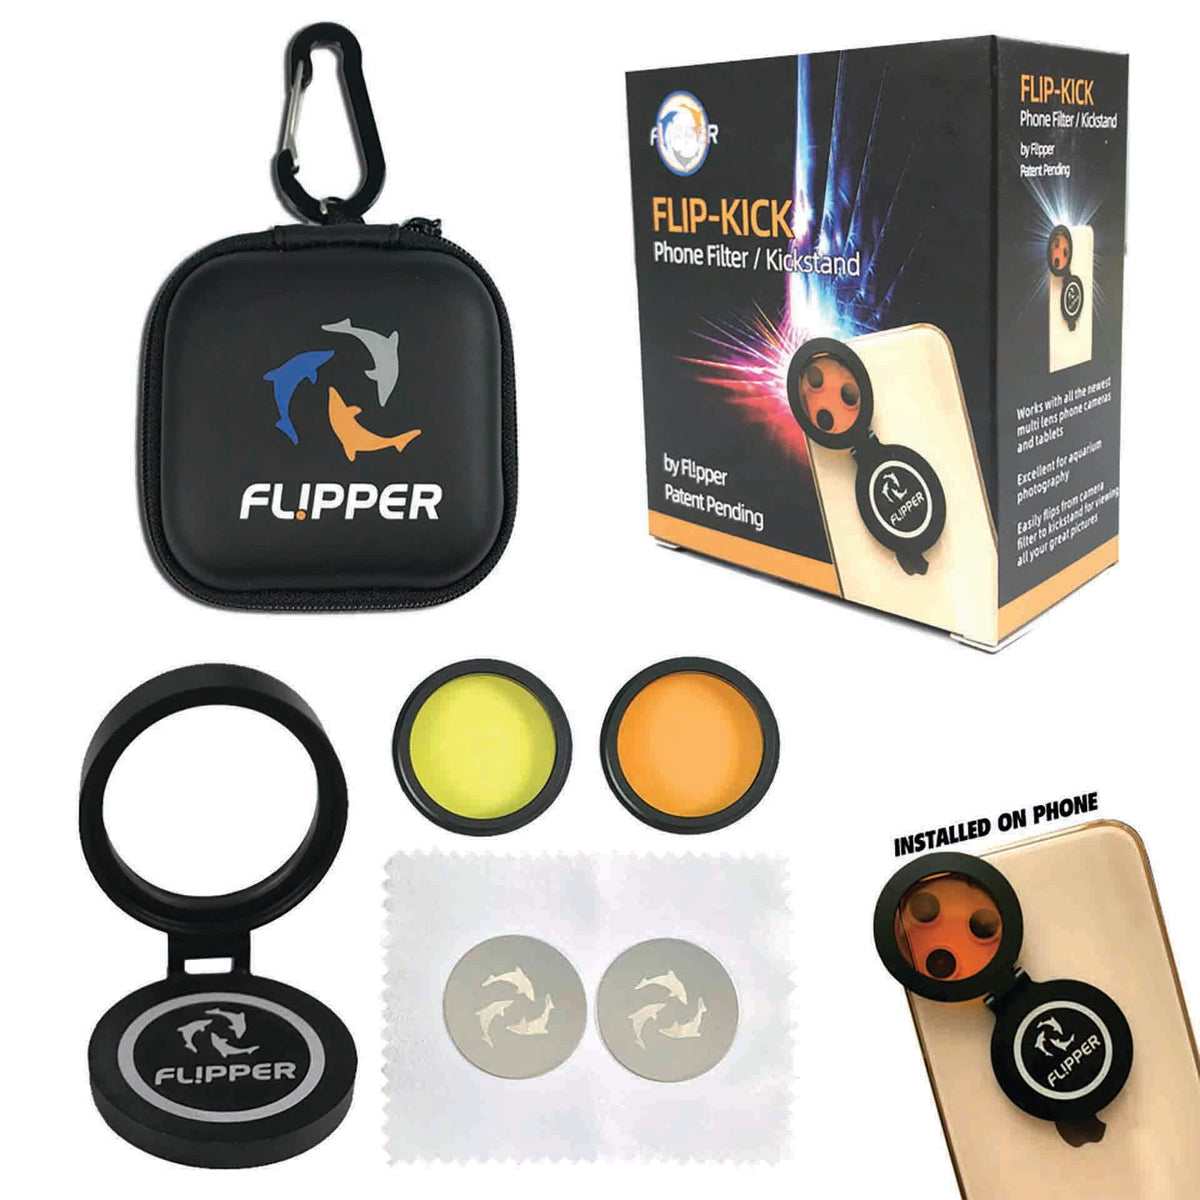 Flipper Flip Kick Phone Filter - Multi-purpose Camera Filter and Phone Stand